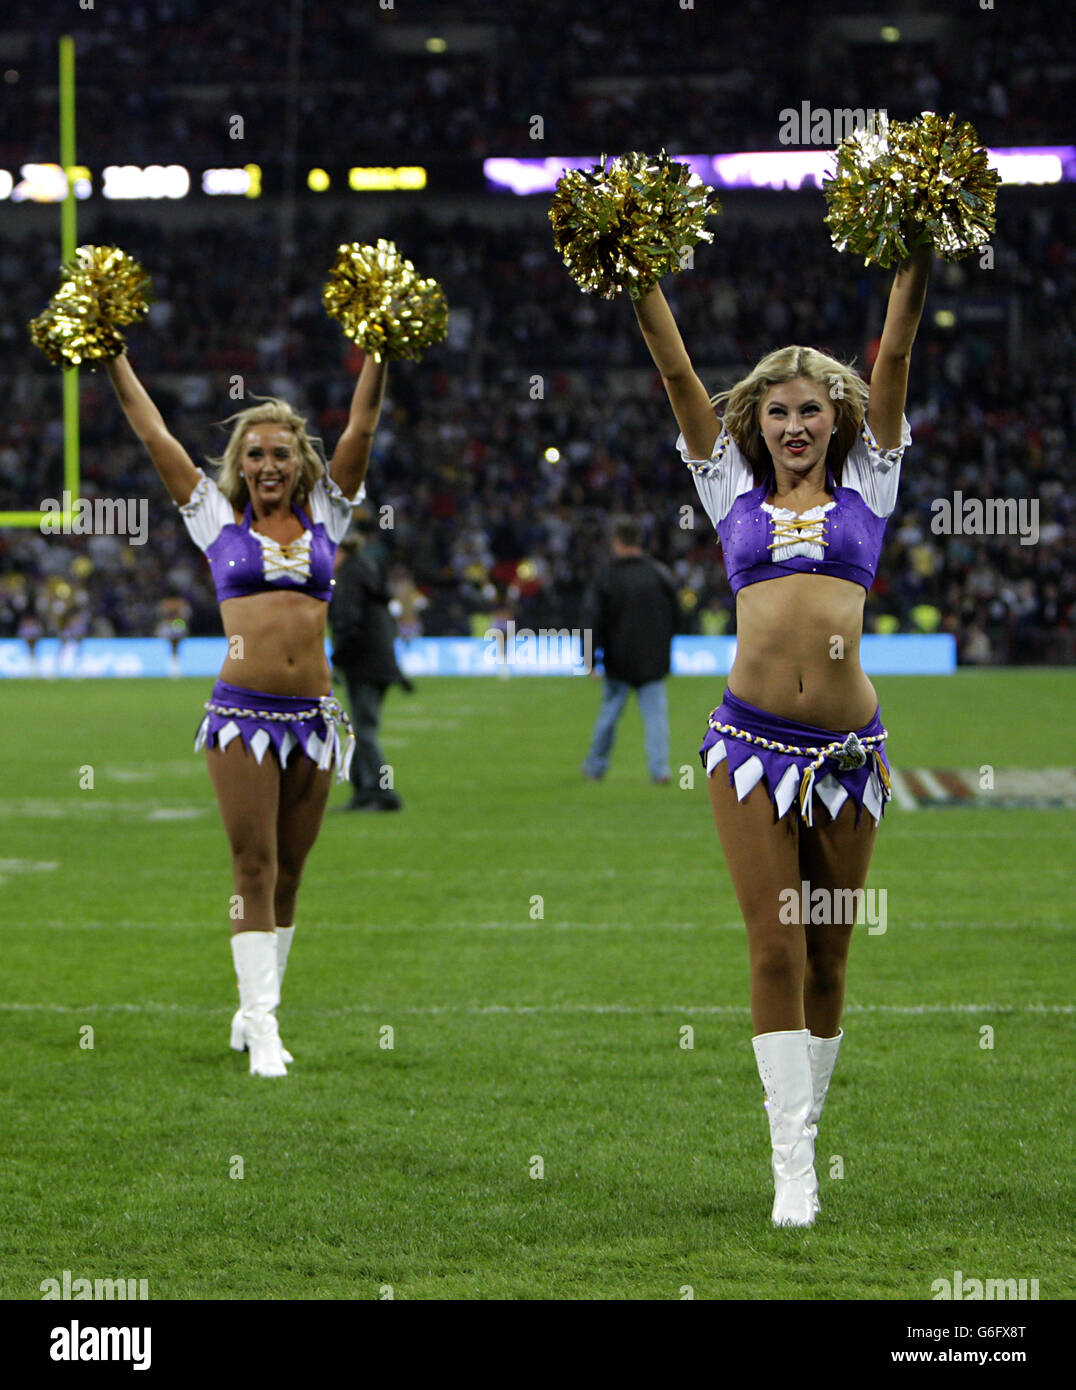 Cheerleader dei Minnesota Vikings durante la partita della NFL International Series al Wembley Stadium, Londra. Foto Stock